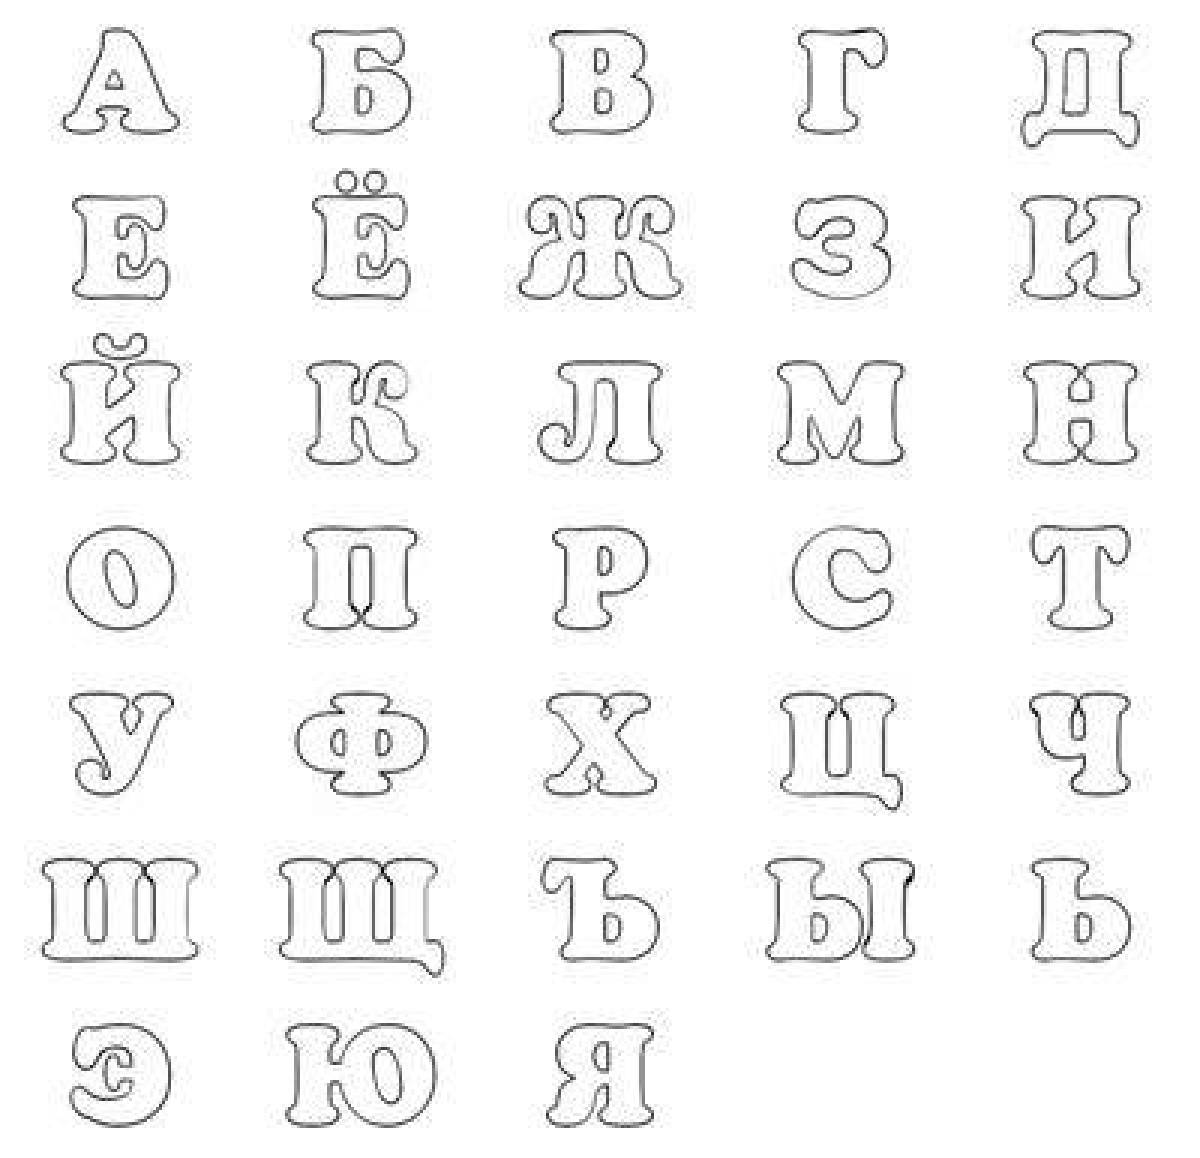 Russian alphabet coloring book